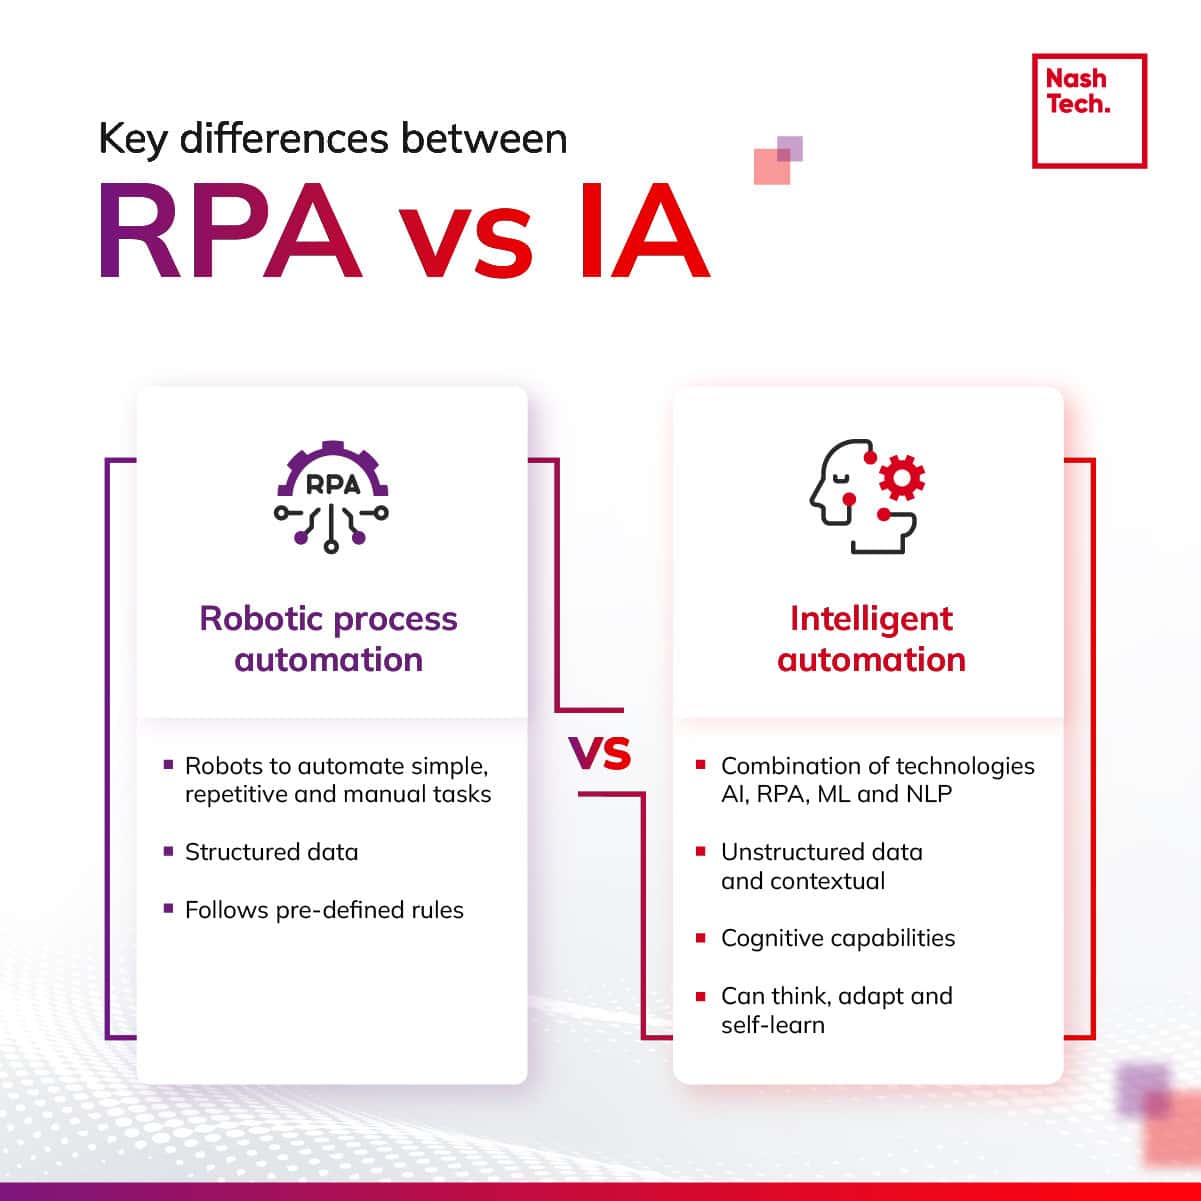 rpa-vs-ia-infographic-copy-2